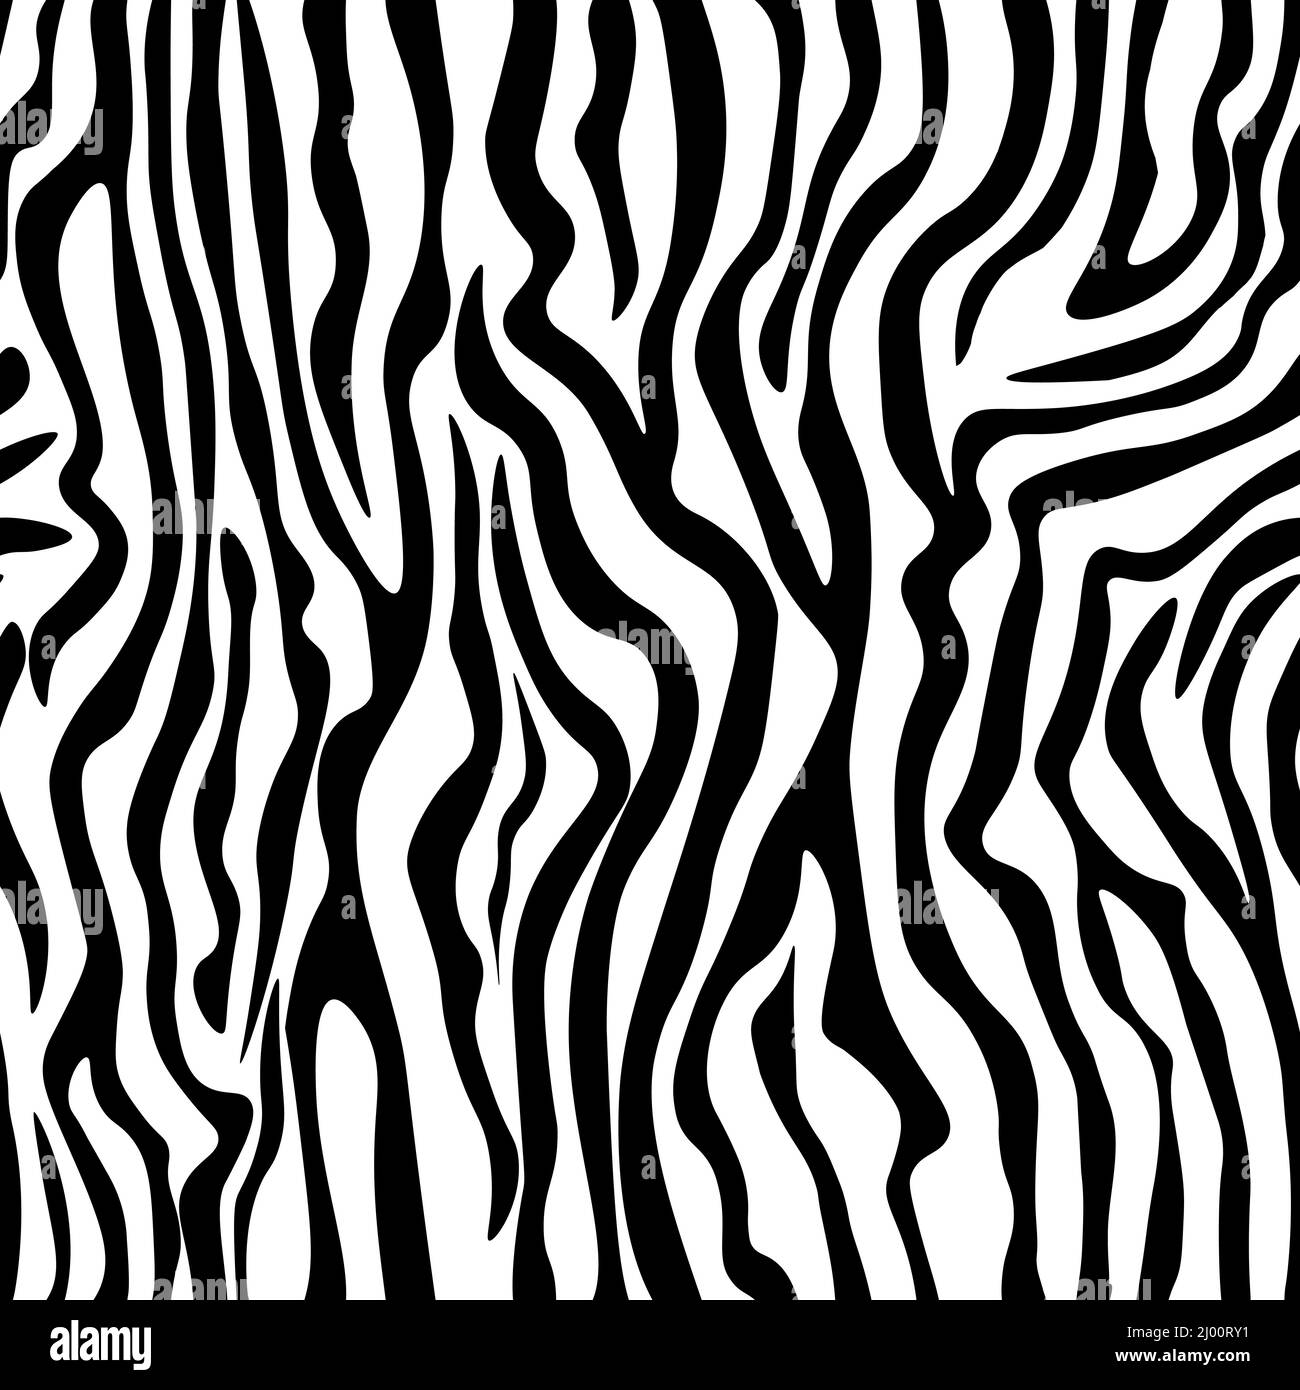 Abstraktes nahtloses Vektor-Muster aus Zebrahaut.Abstrakter Druck aus der Haut wilder Tiere. Für Print, Web, Wohnkultur, Mode, Oberfläche, Grafik Stock Vektor